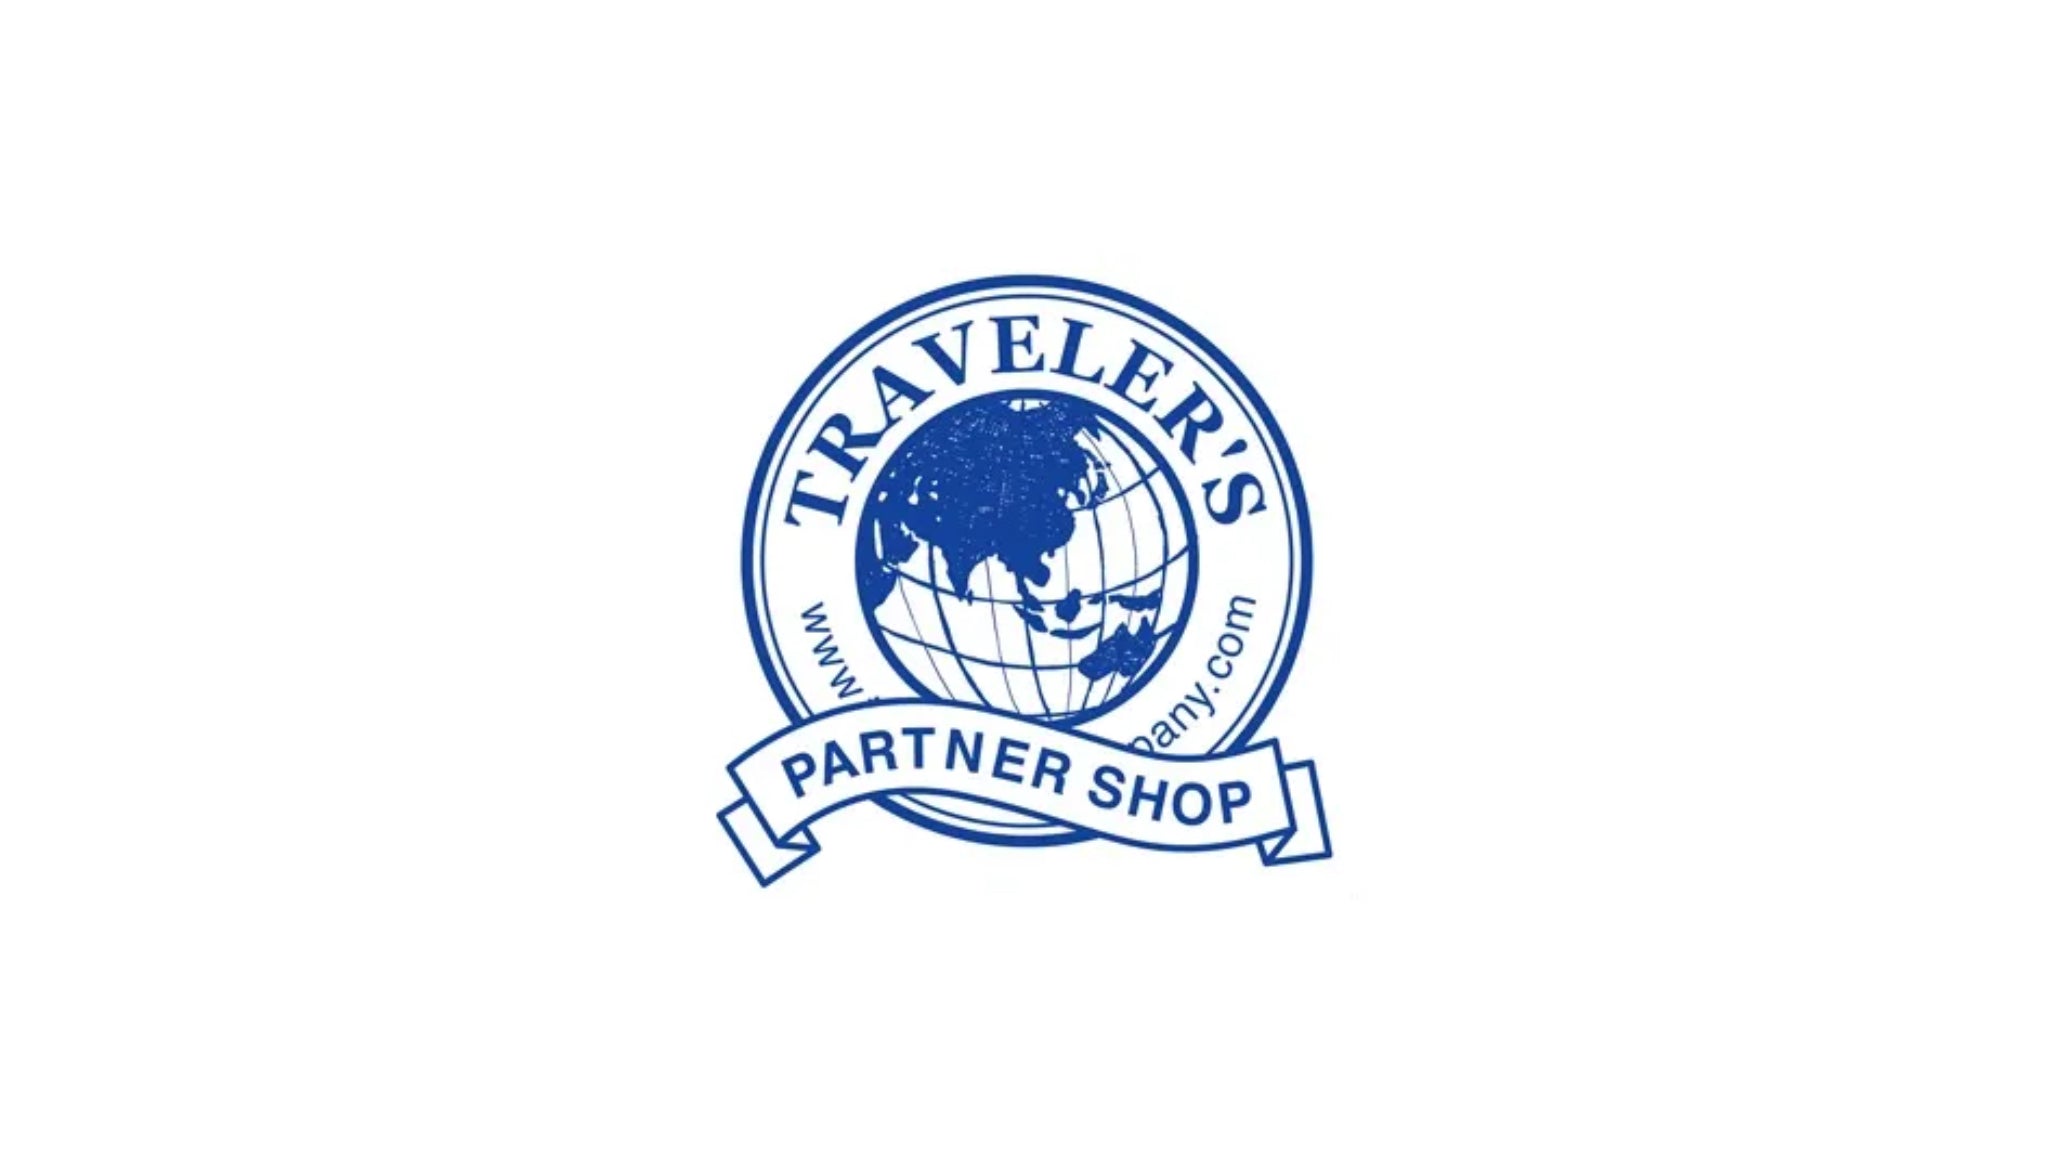 Traveler's Partner Shop logo with blue globe